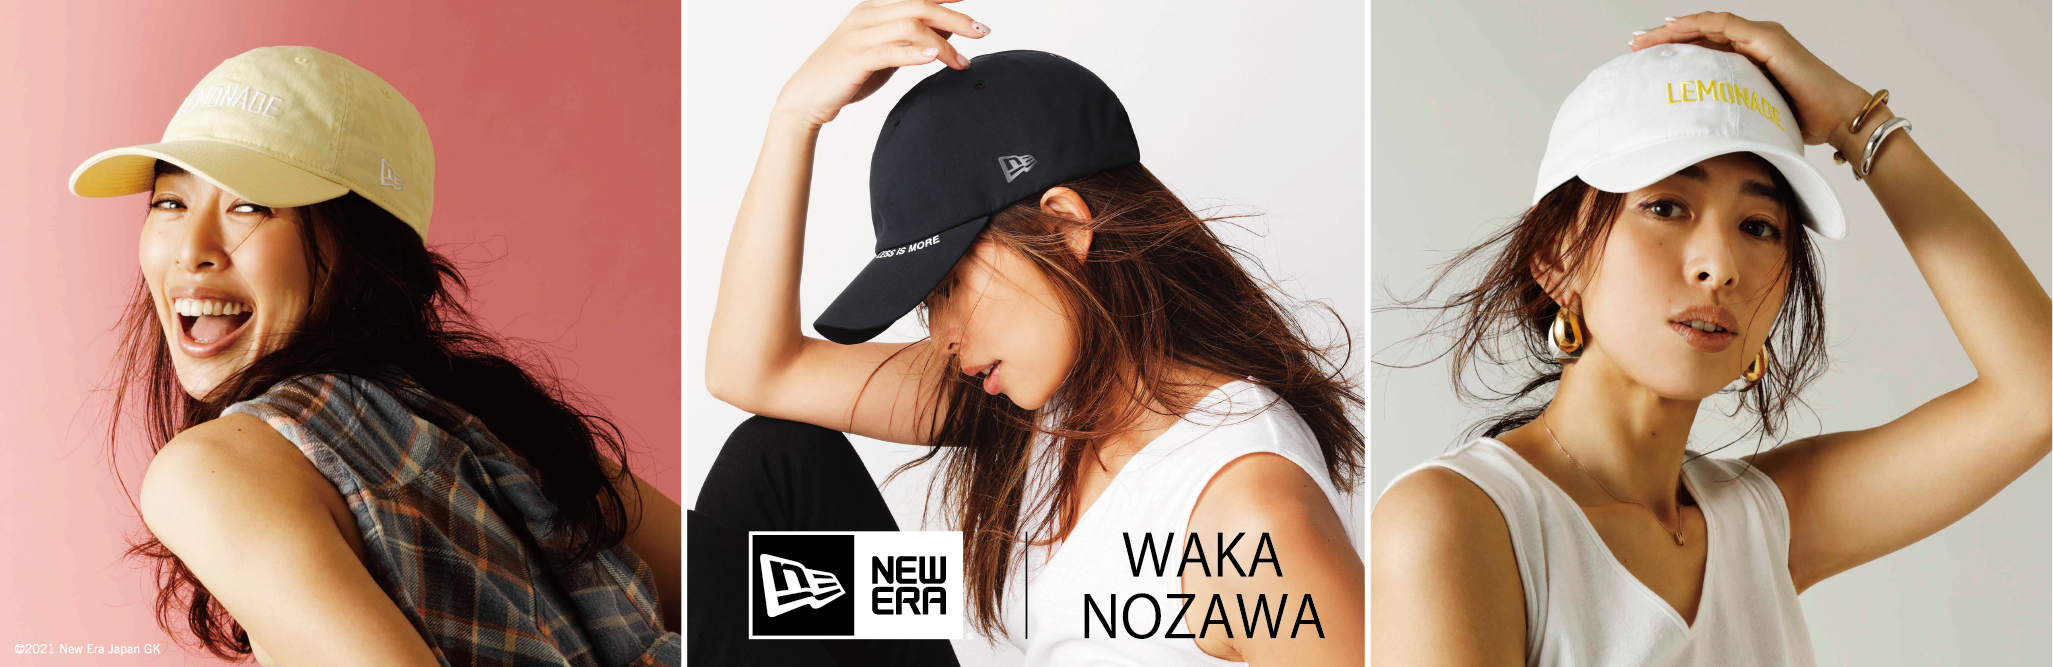 NEW ERA × WAKA NOZAWA 3/23(火)予約販売START☆ | BAYFLOW オフィシャルブランドサイト